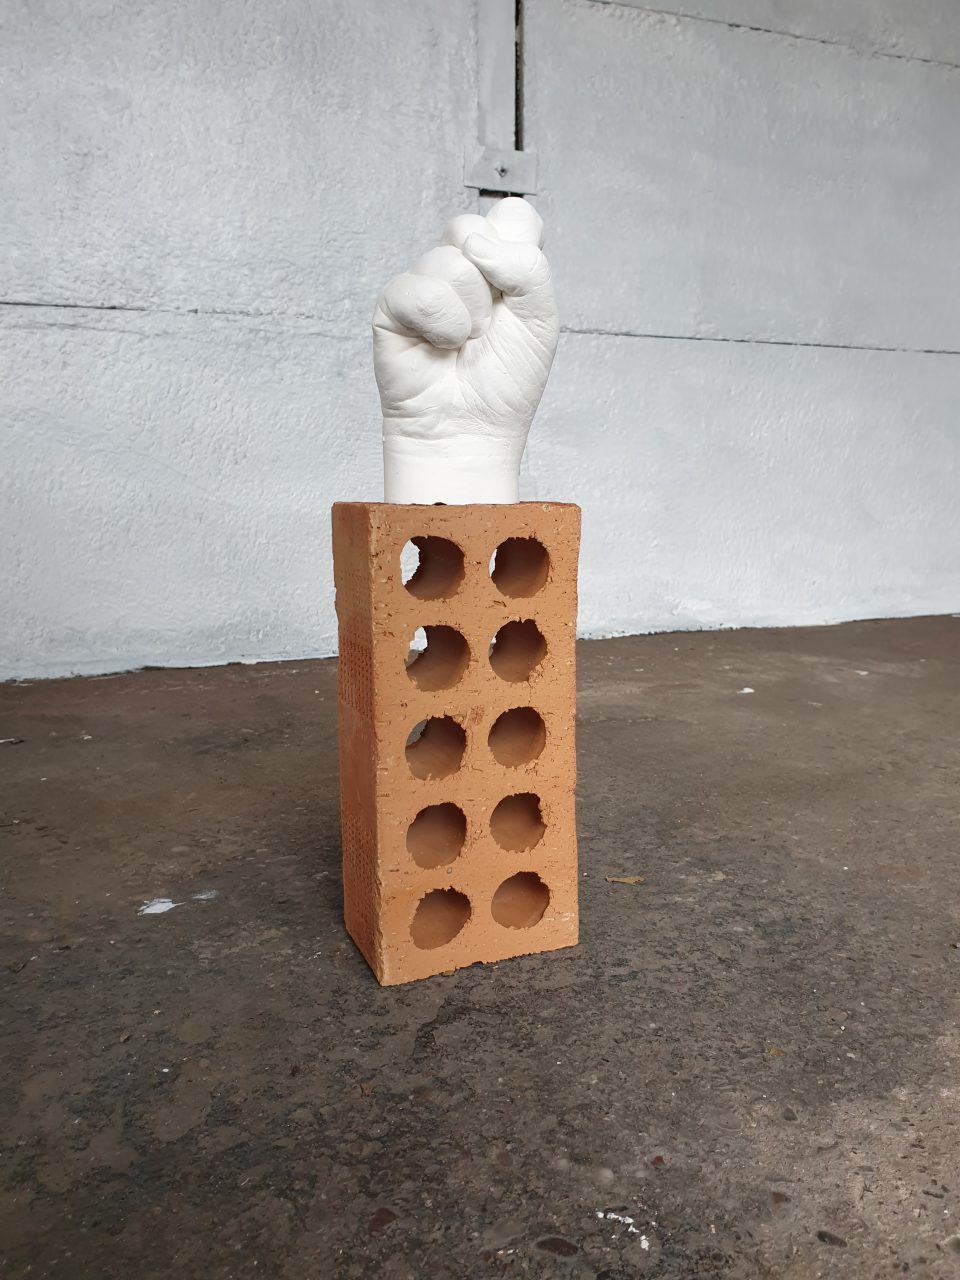 Single white alginate plaster cast of hand in a fist on single orange building brick. 16 x 12 x 8 inches.